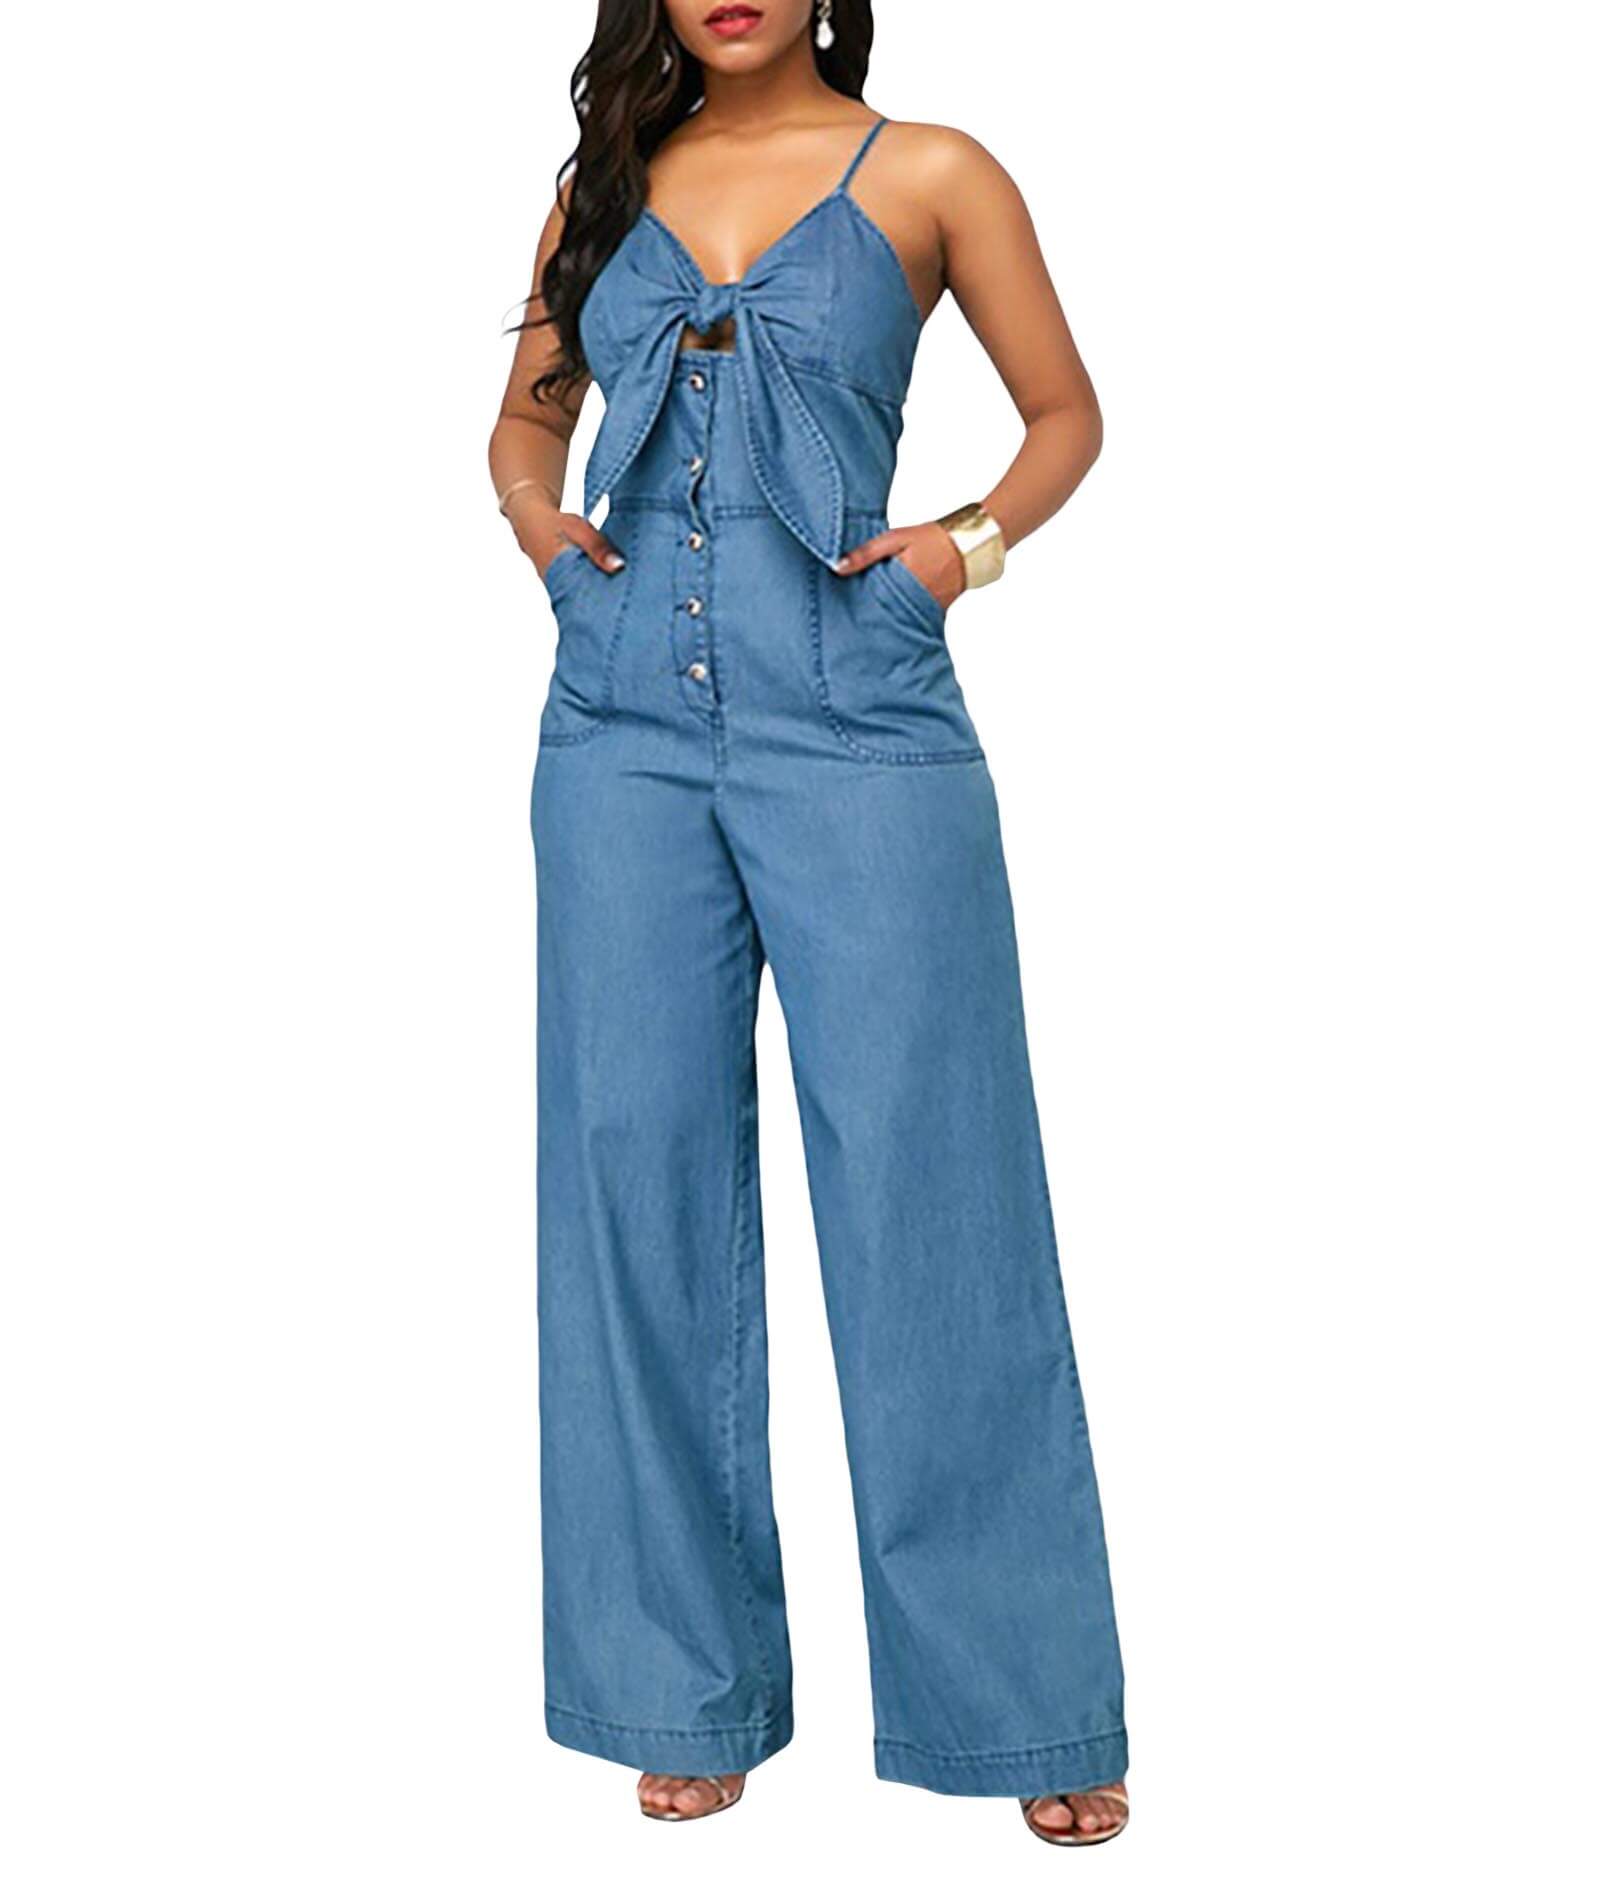  Women's Spaghetti Strap Wide Leg Denim Blue Long Jumpsuit Playsuit Rompers(9277LB,S)